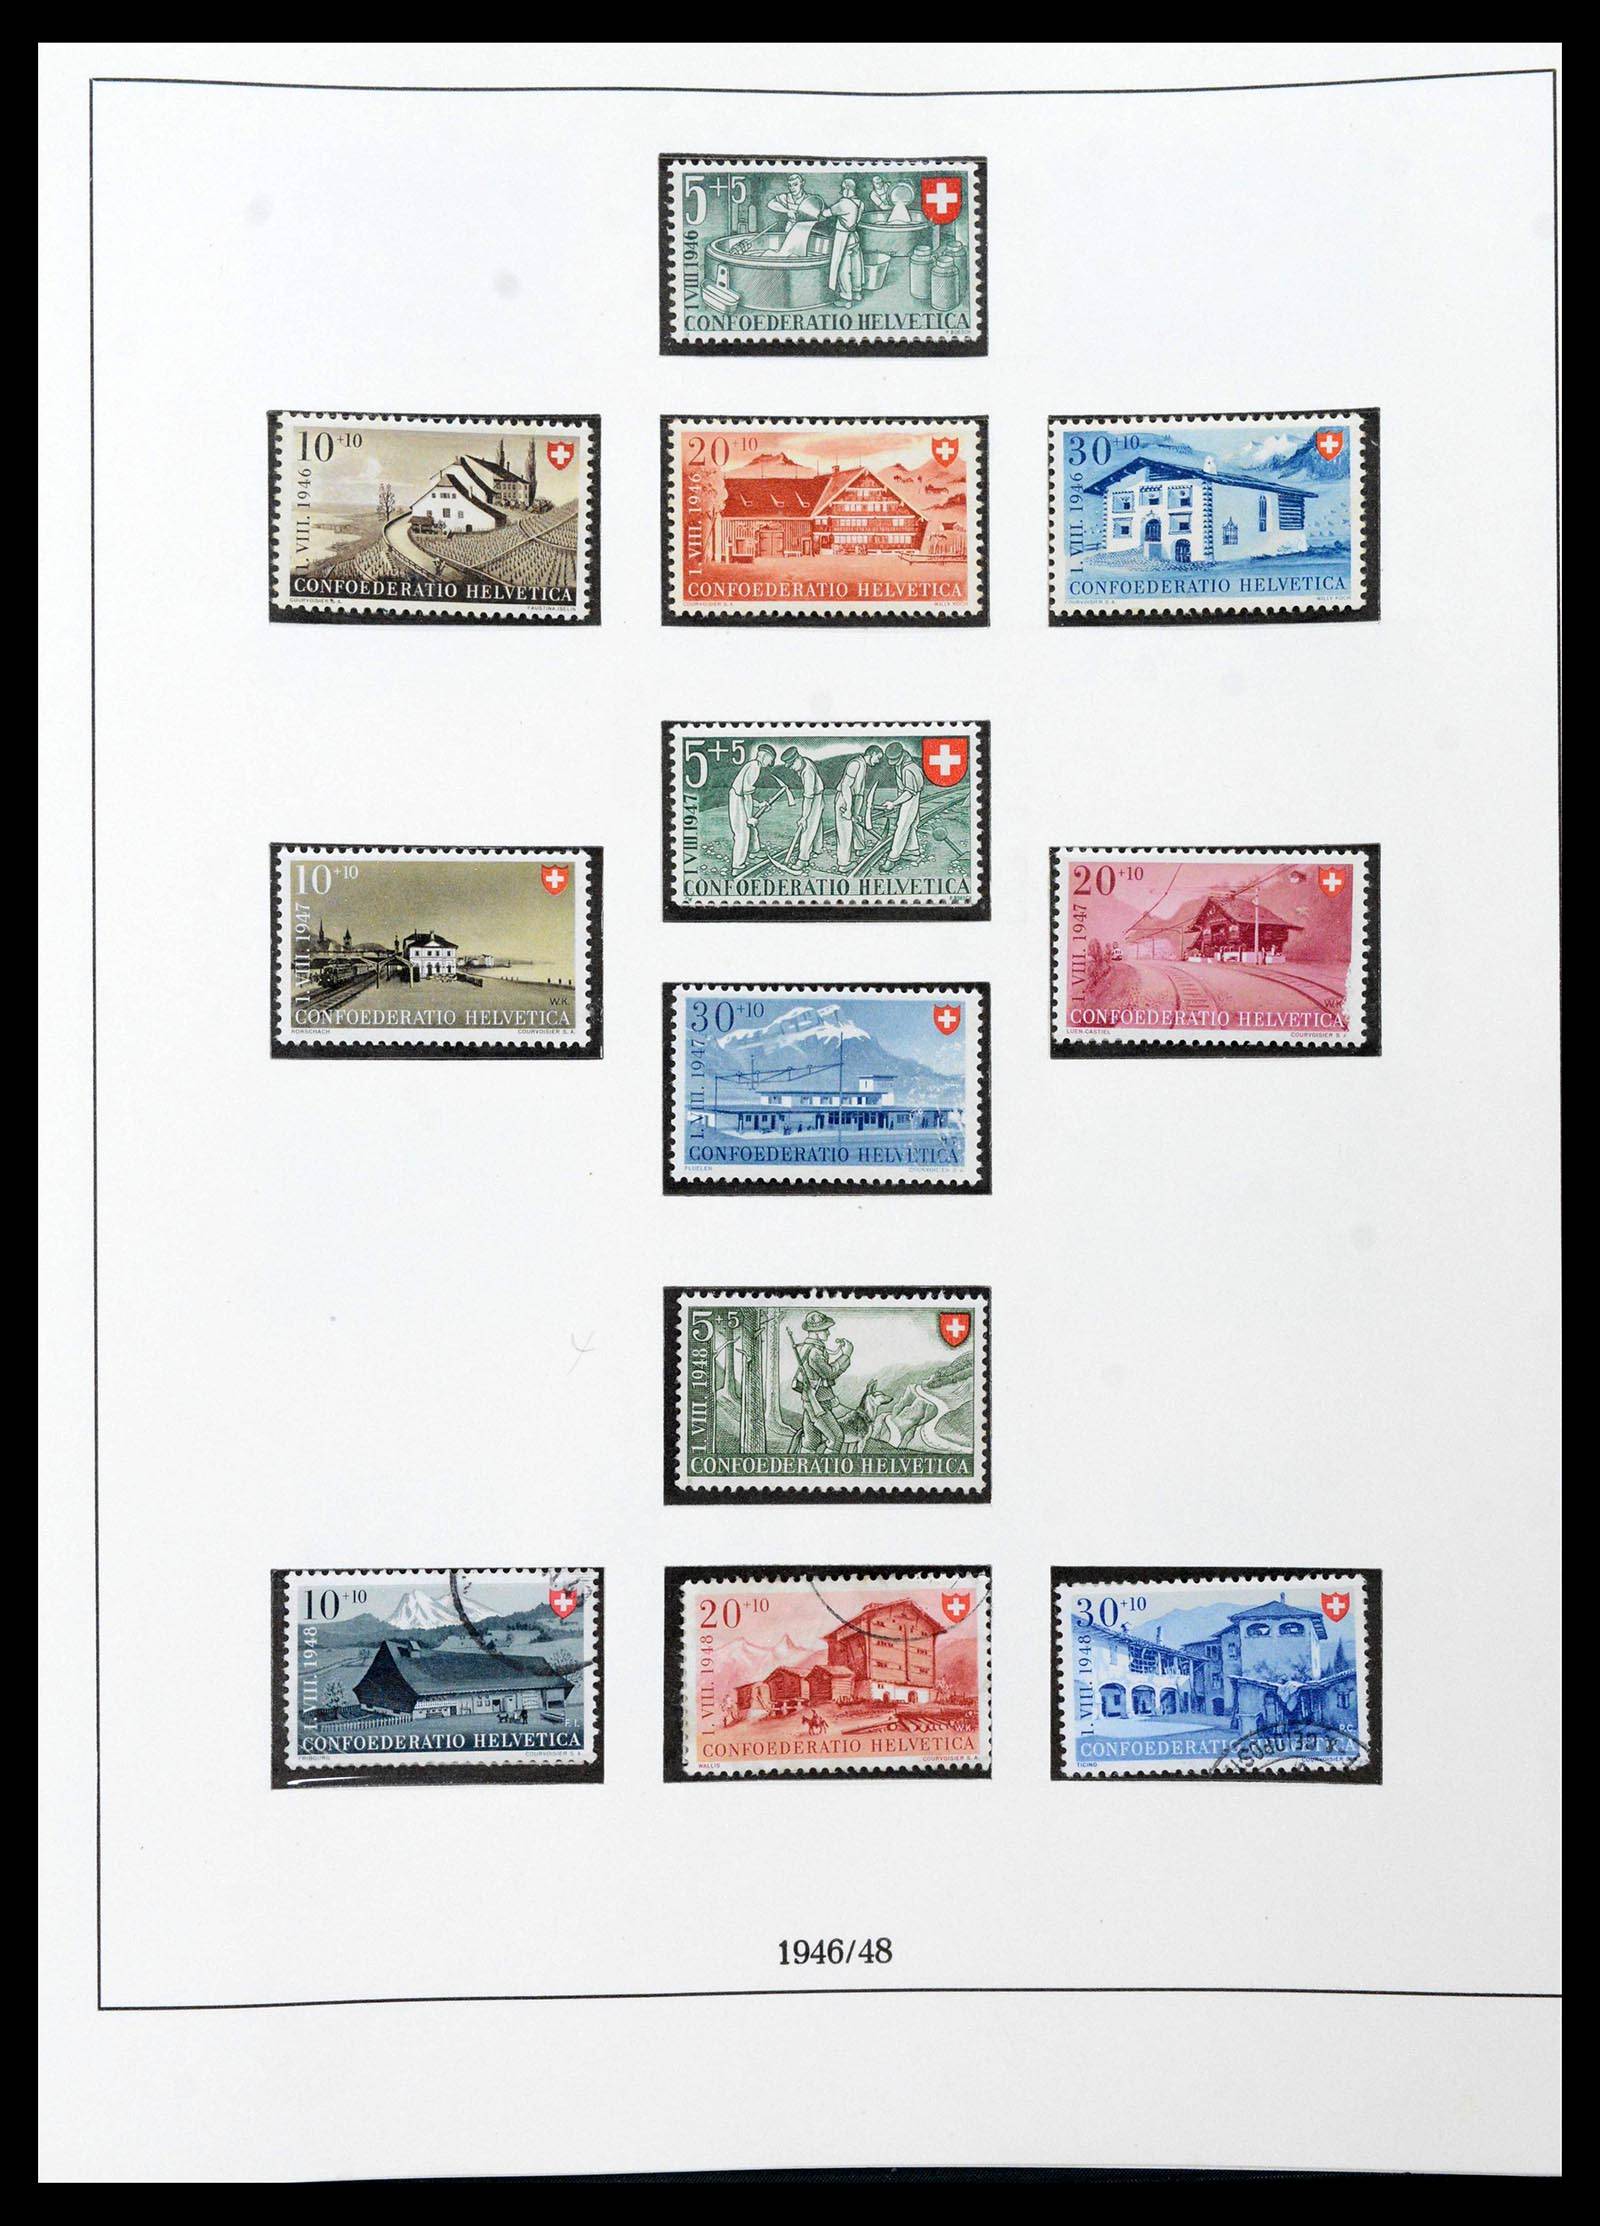 39235 0043 - Stamp collection 39235 Switzerland 1843-1960.